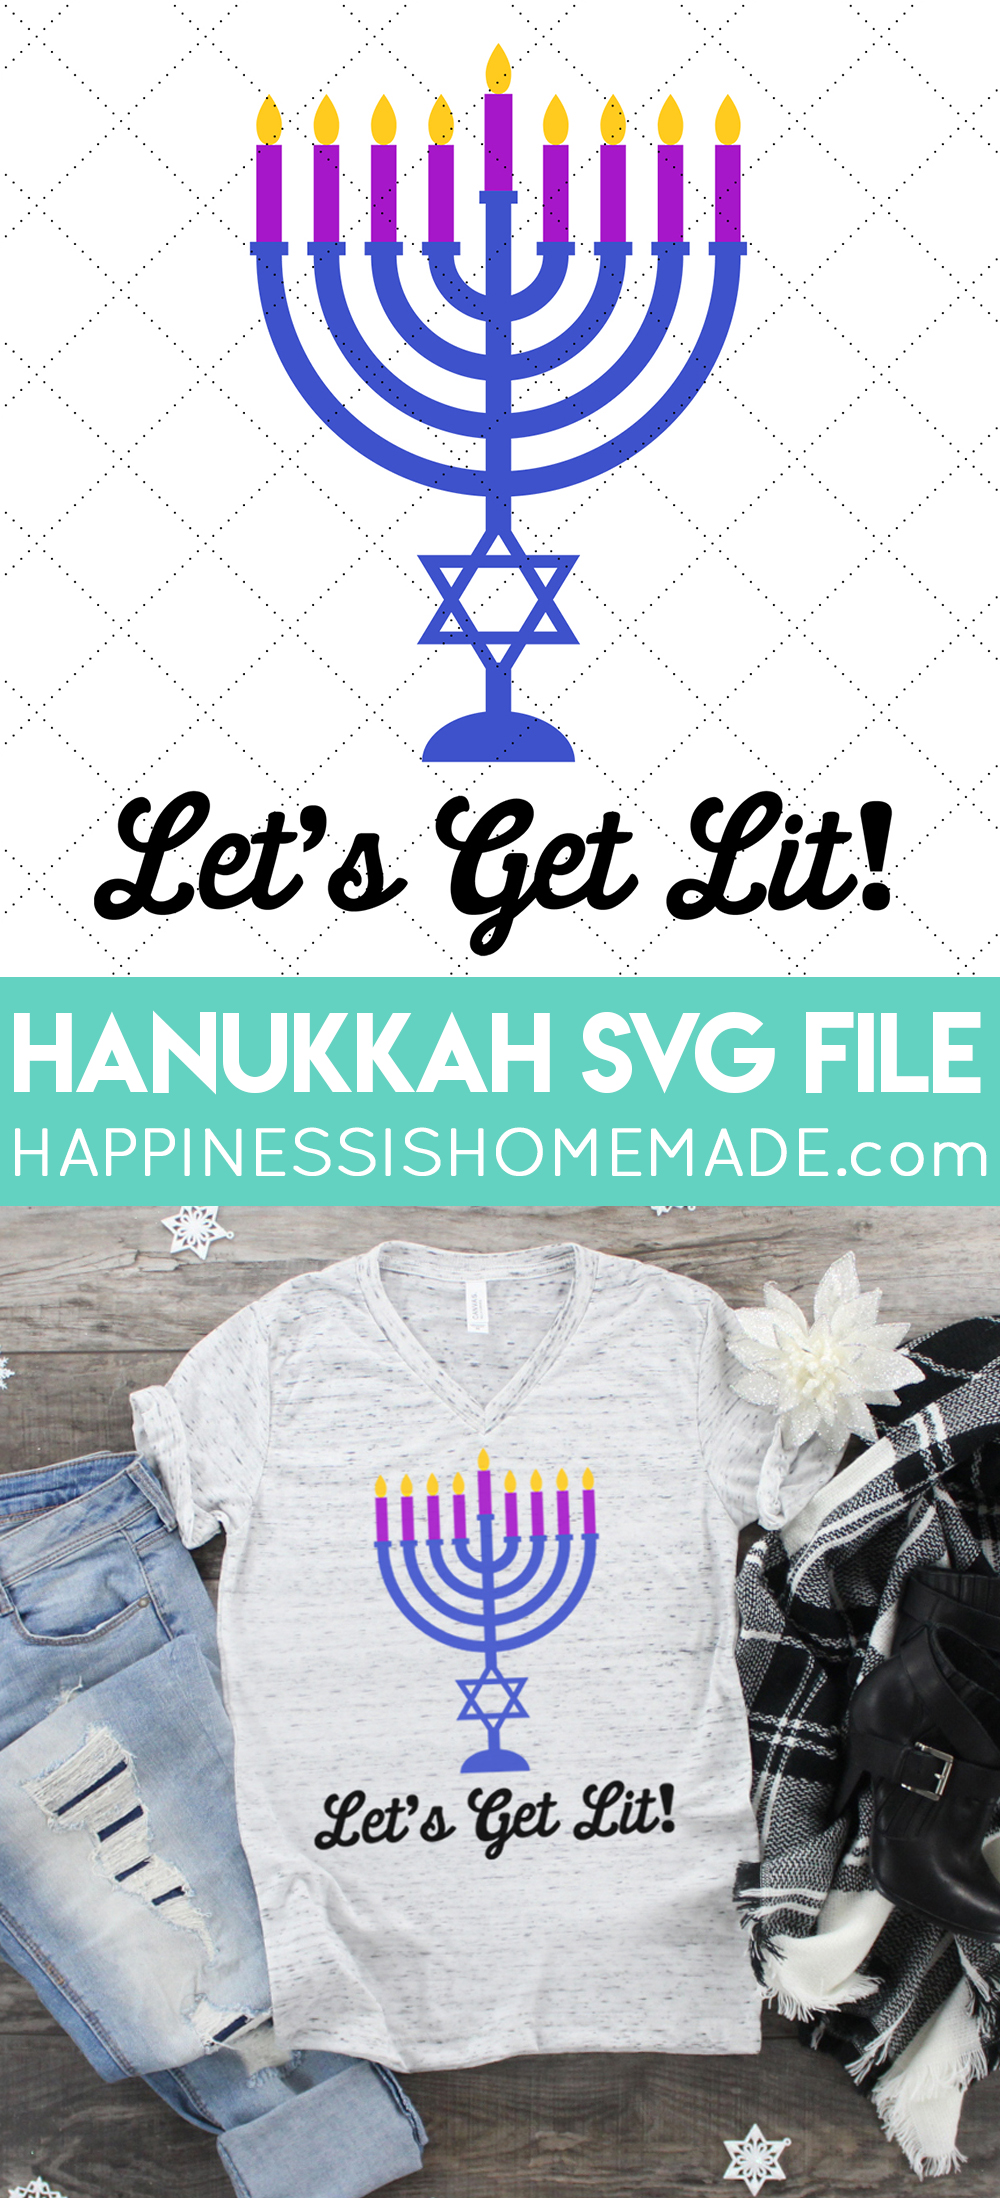 hanukkah svg file and shirt